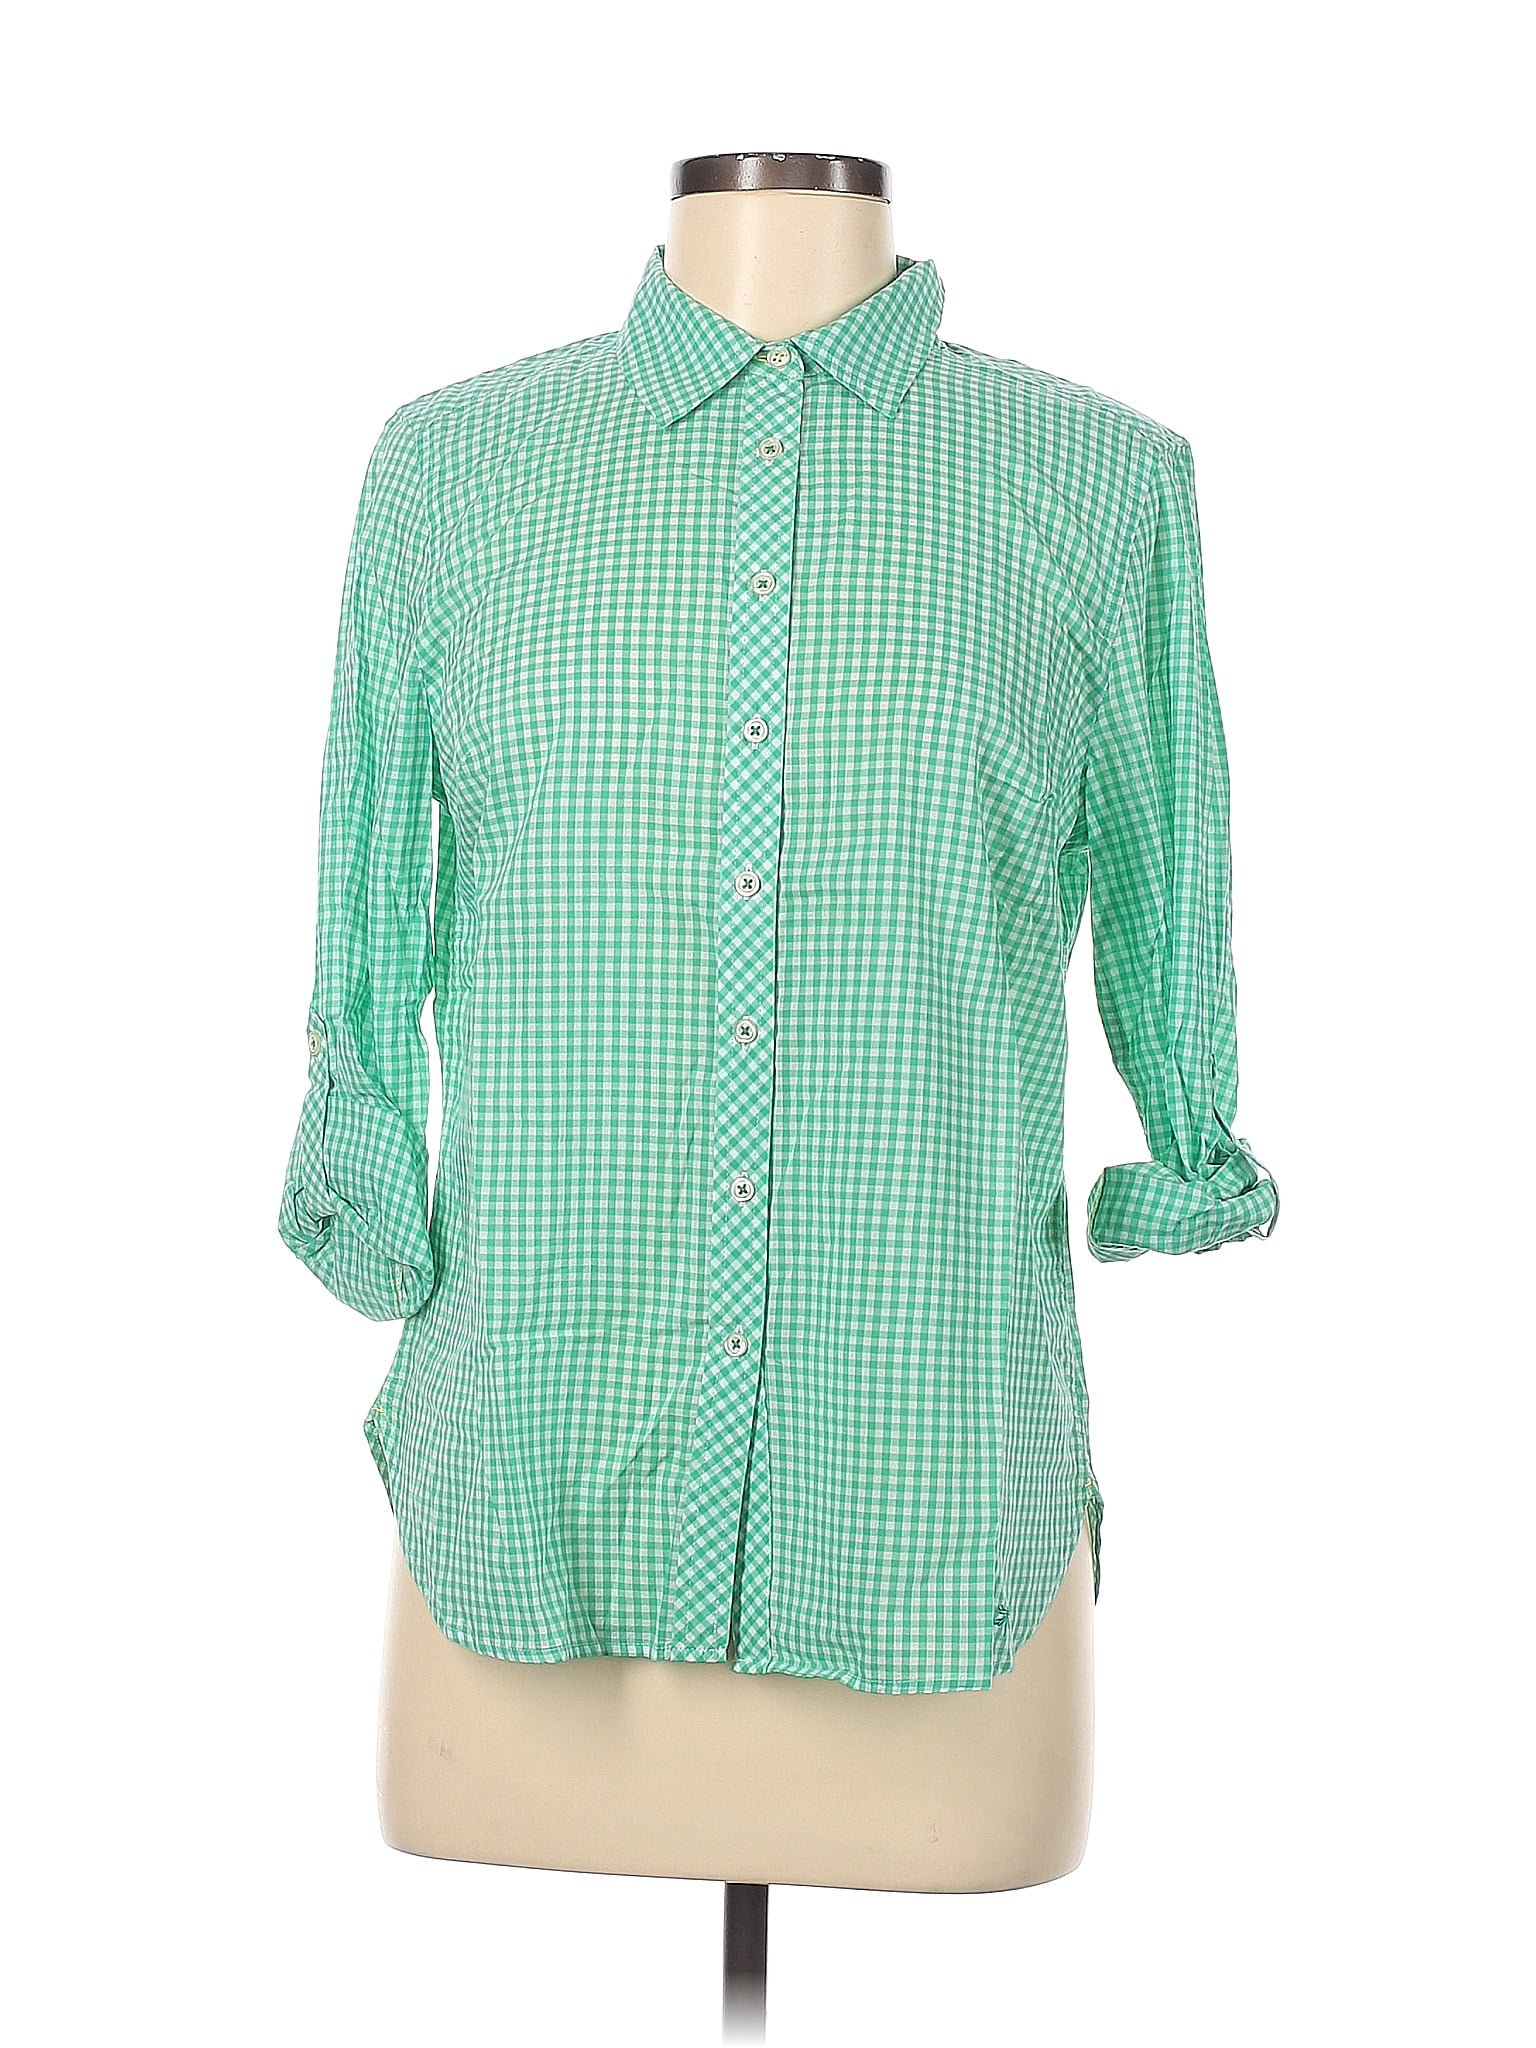 Talbots 100% Cotton Green Short Sleeve T-Shirt Size M (Petite) - 65% off